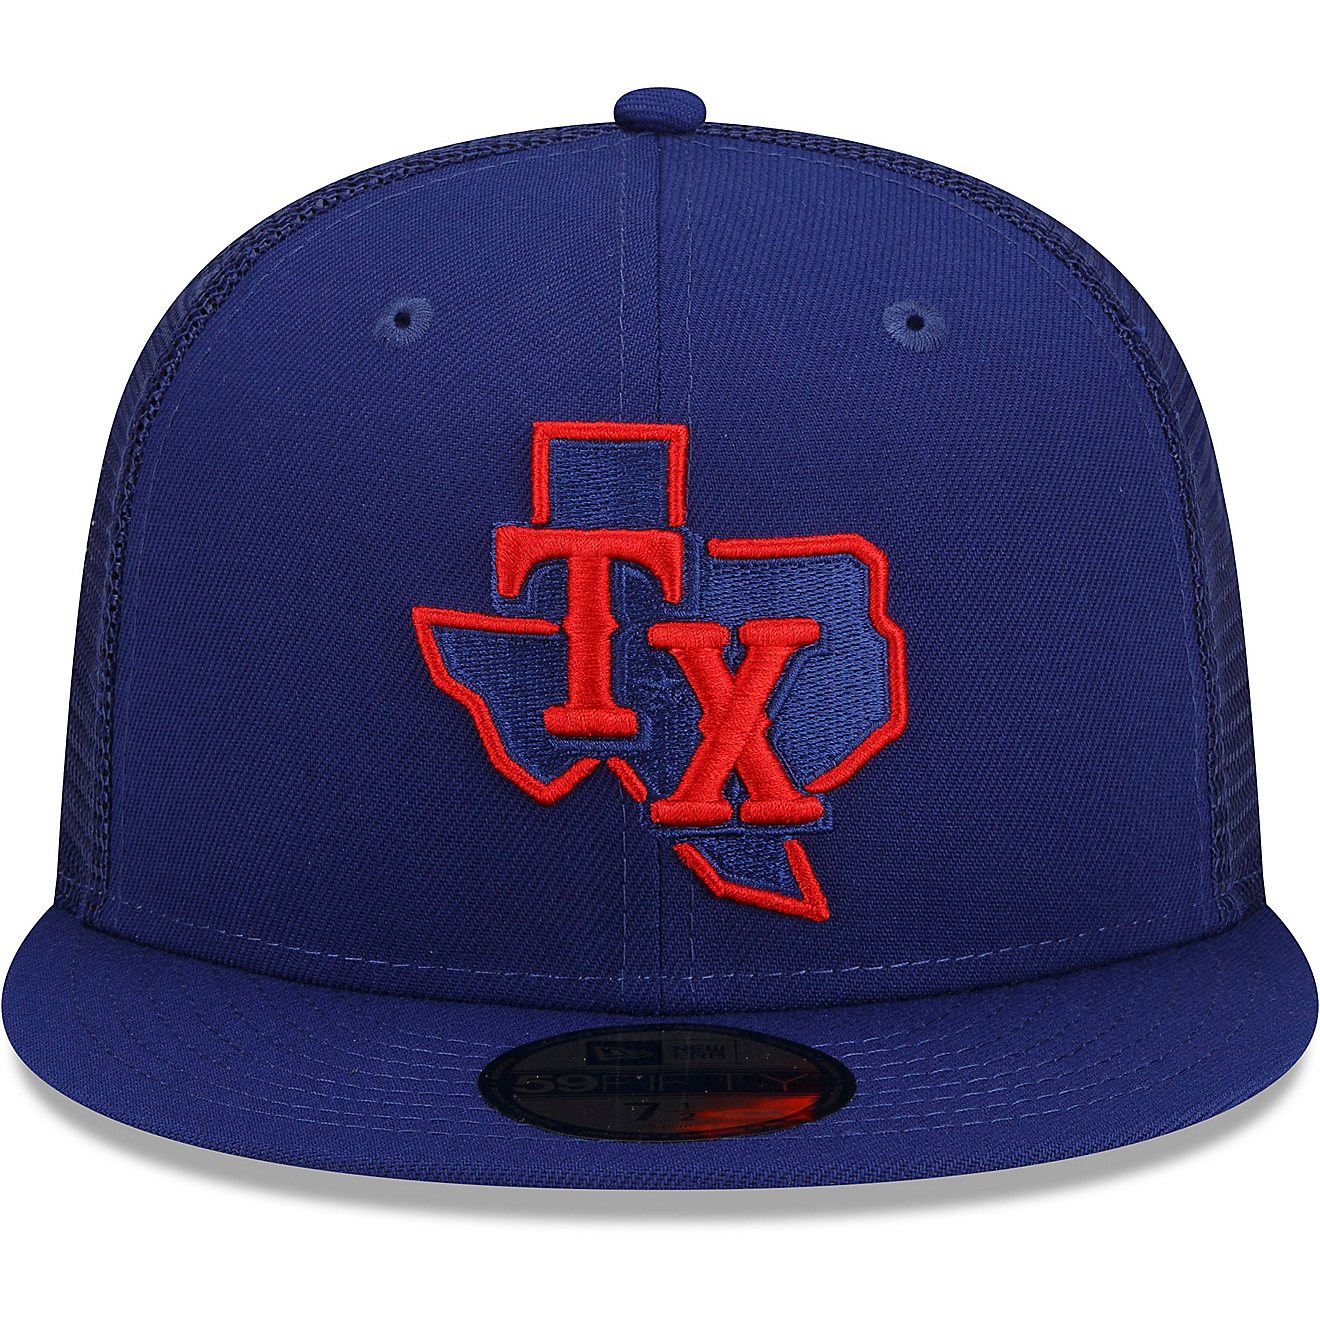 New Era Men's Texas Rangers Batting Practice OTC 59FIFTY Cap                                                                     - view number 2